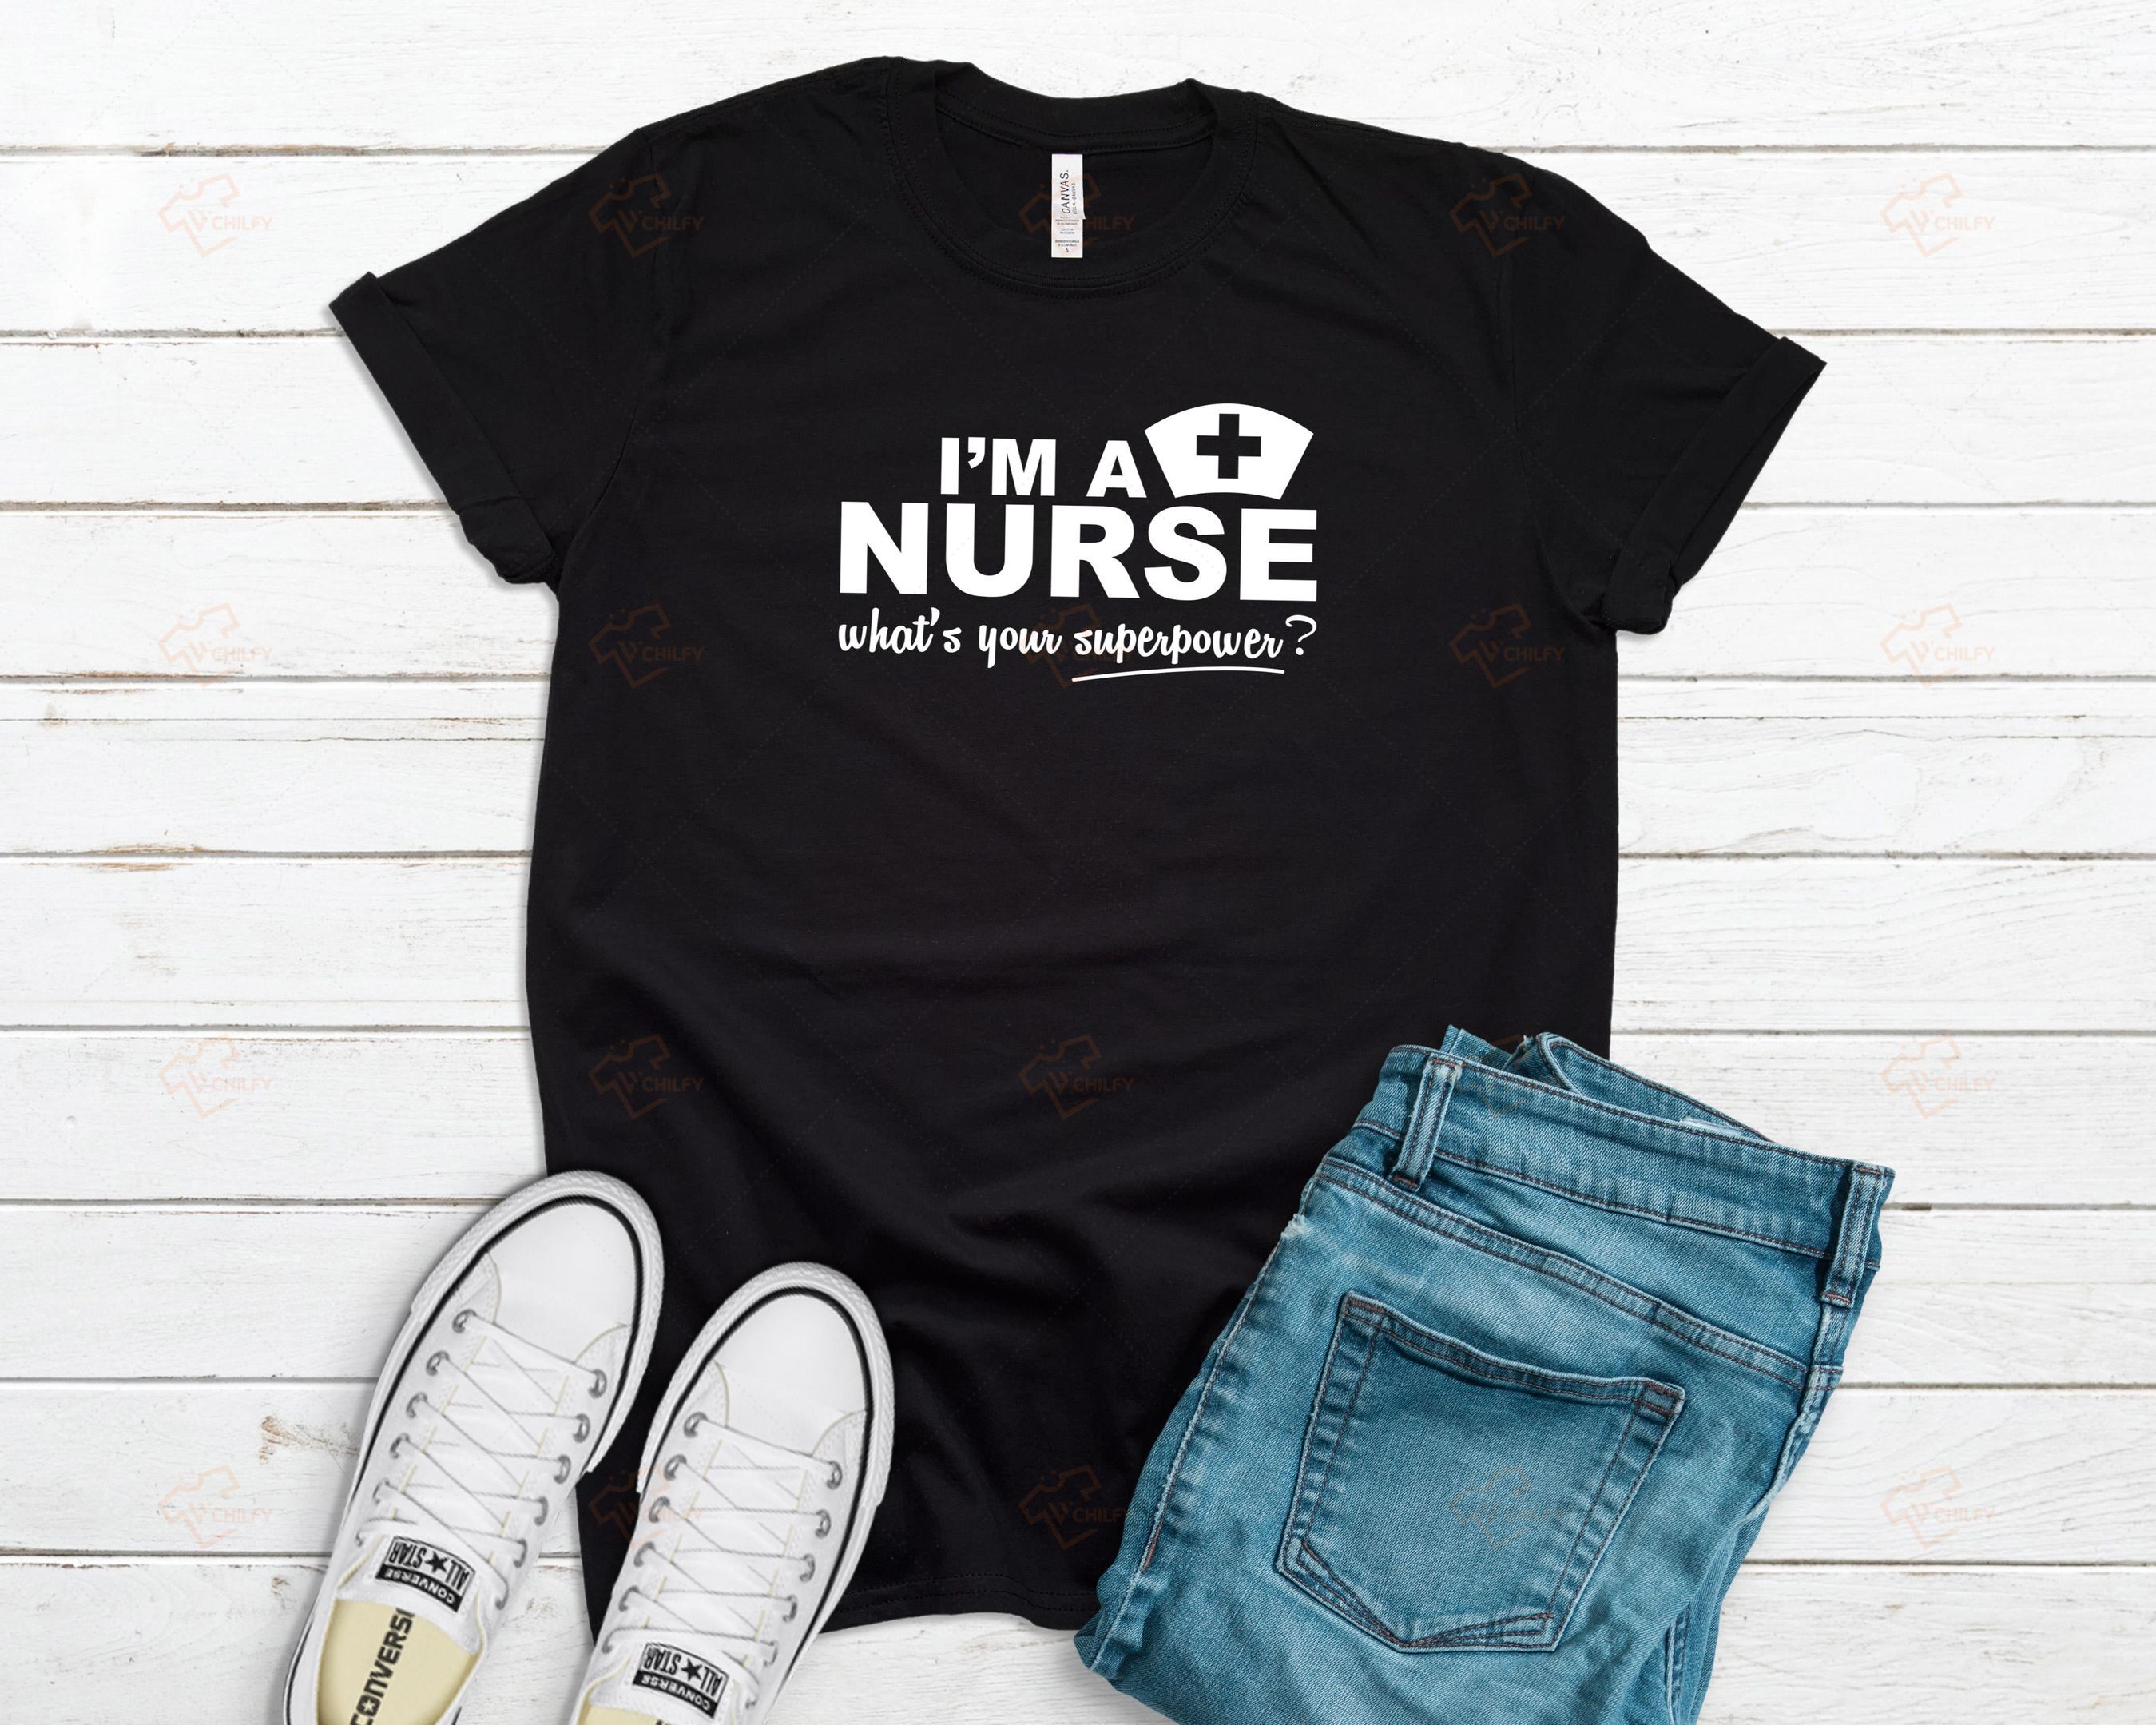 Power Of A Nurse Shirt, Nurse Super Power Shirt, Nurse Gift, Funny Nurse Shirt, Registered Nurse Tee